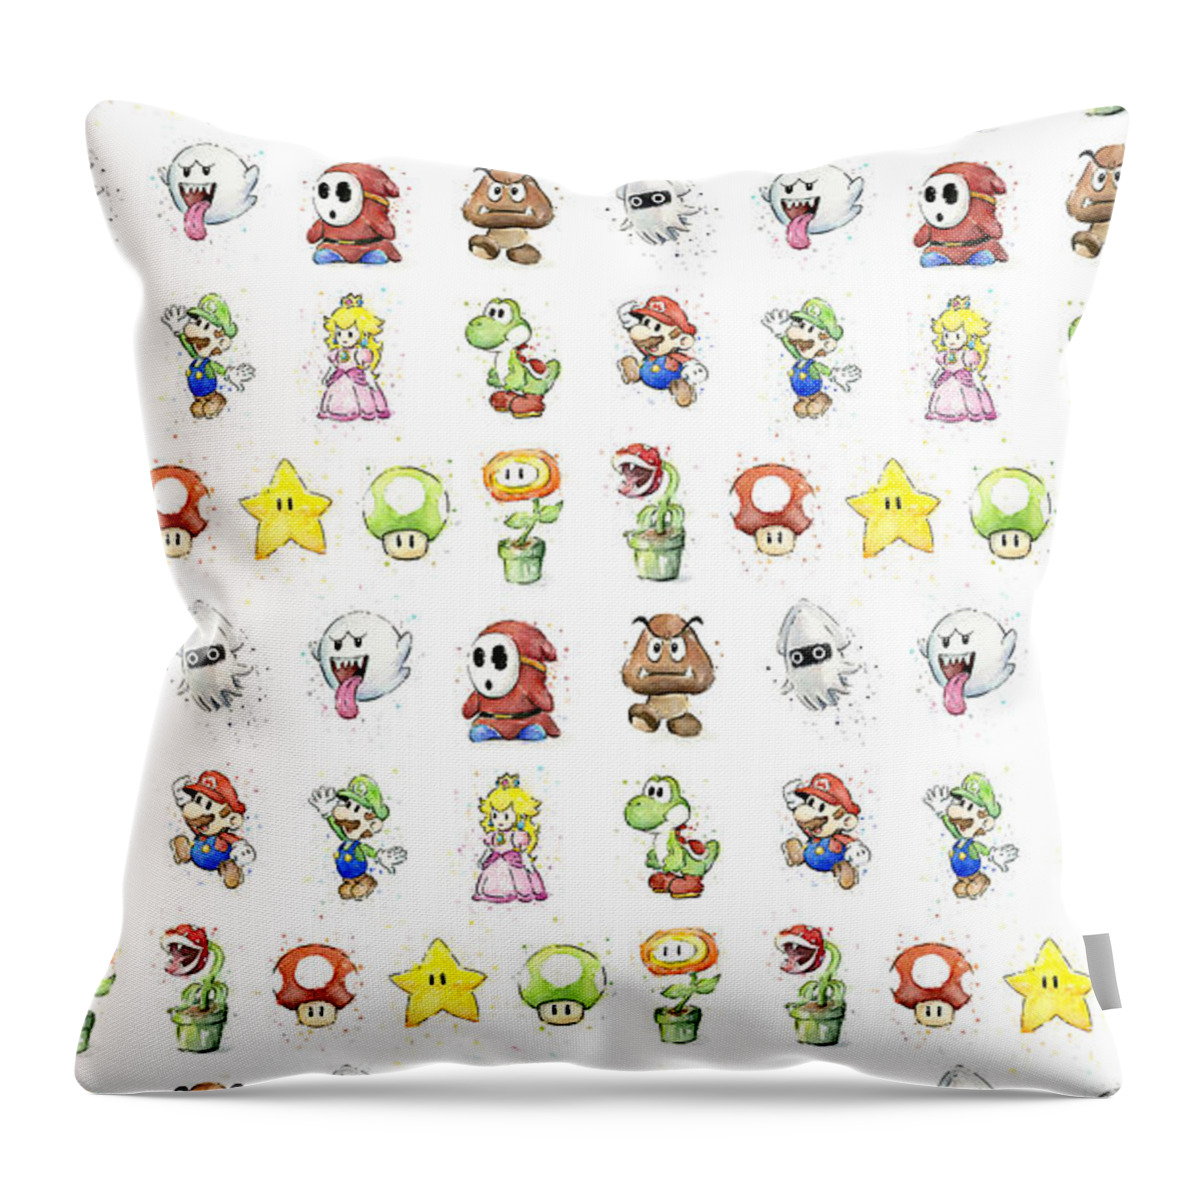 Mario Characters in Watercolor Kids T-Shirt by Olga Shvartsur - Pixels Merch